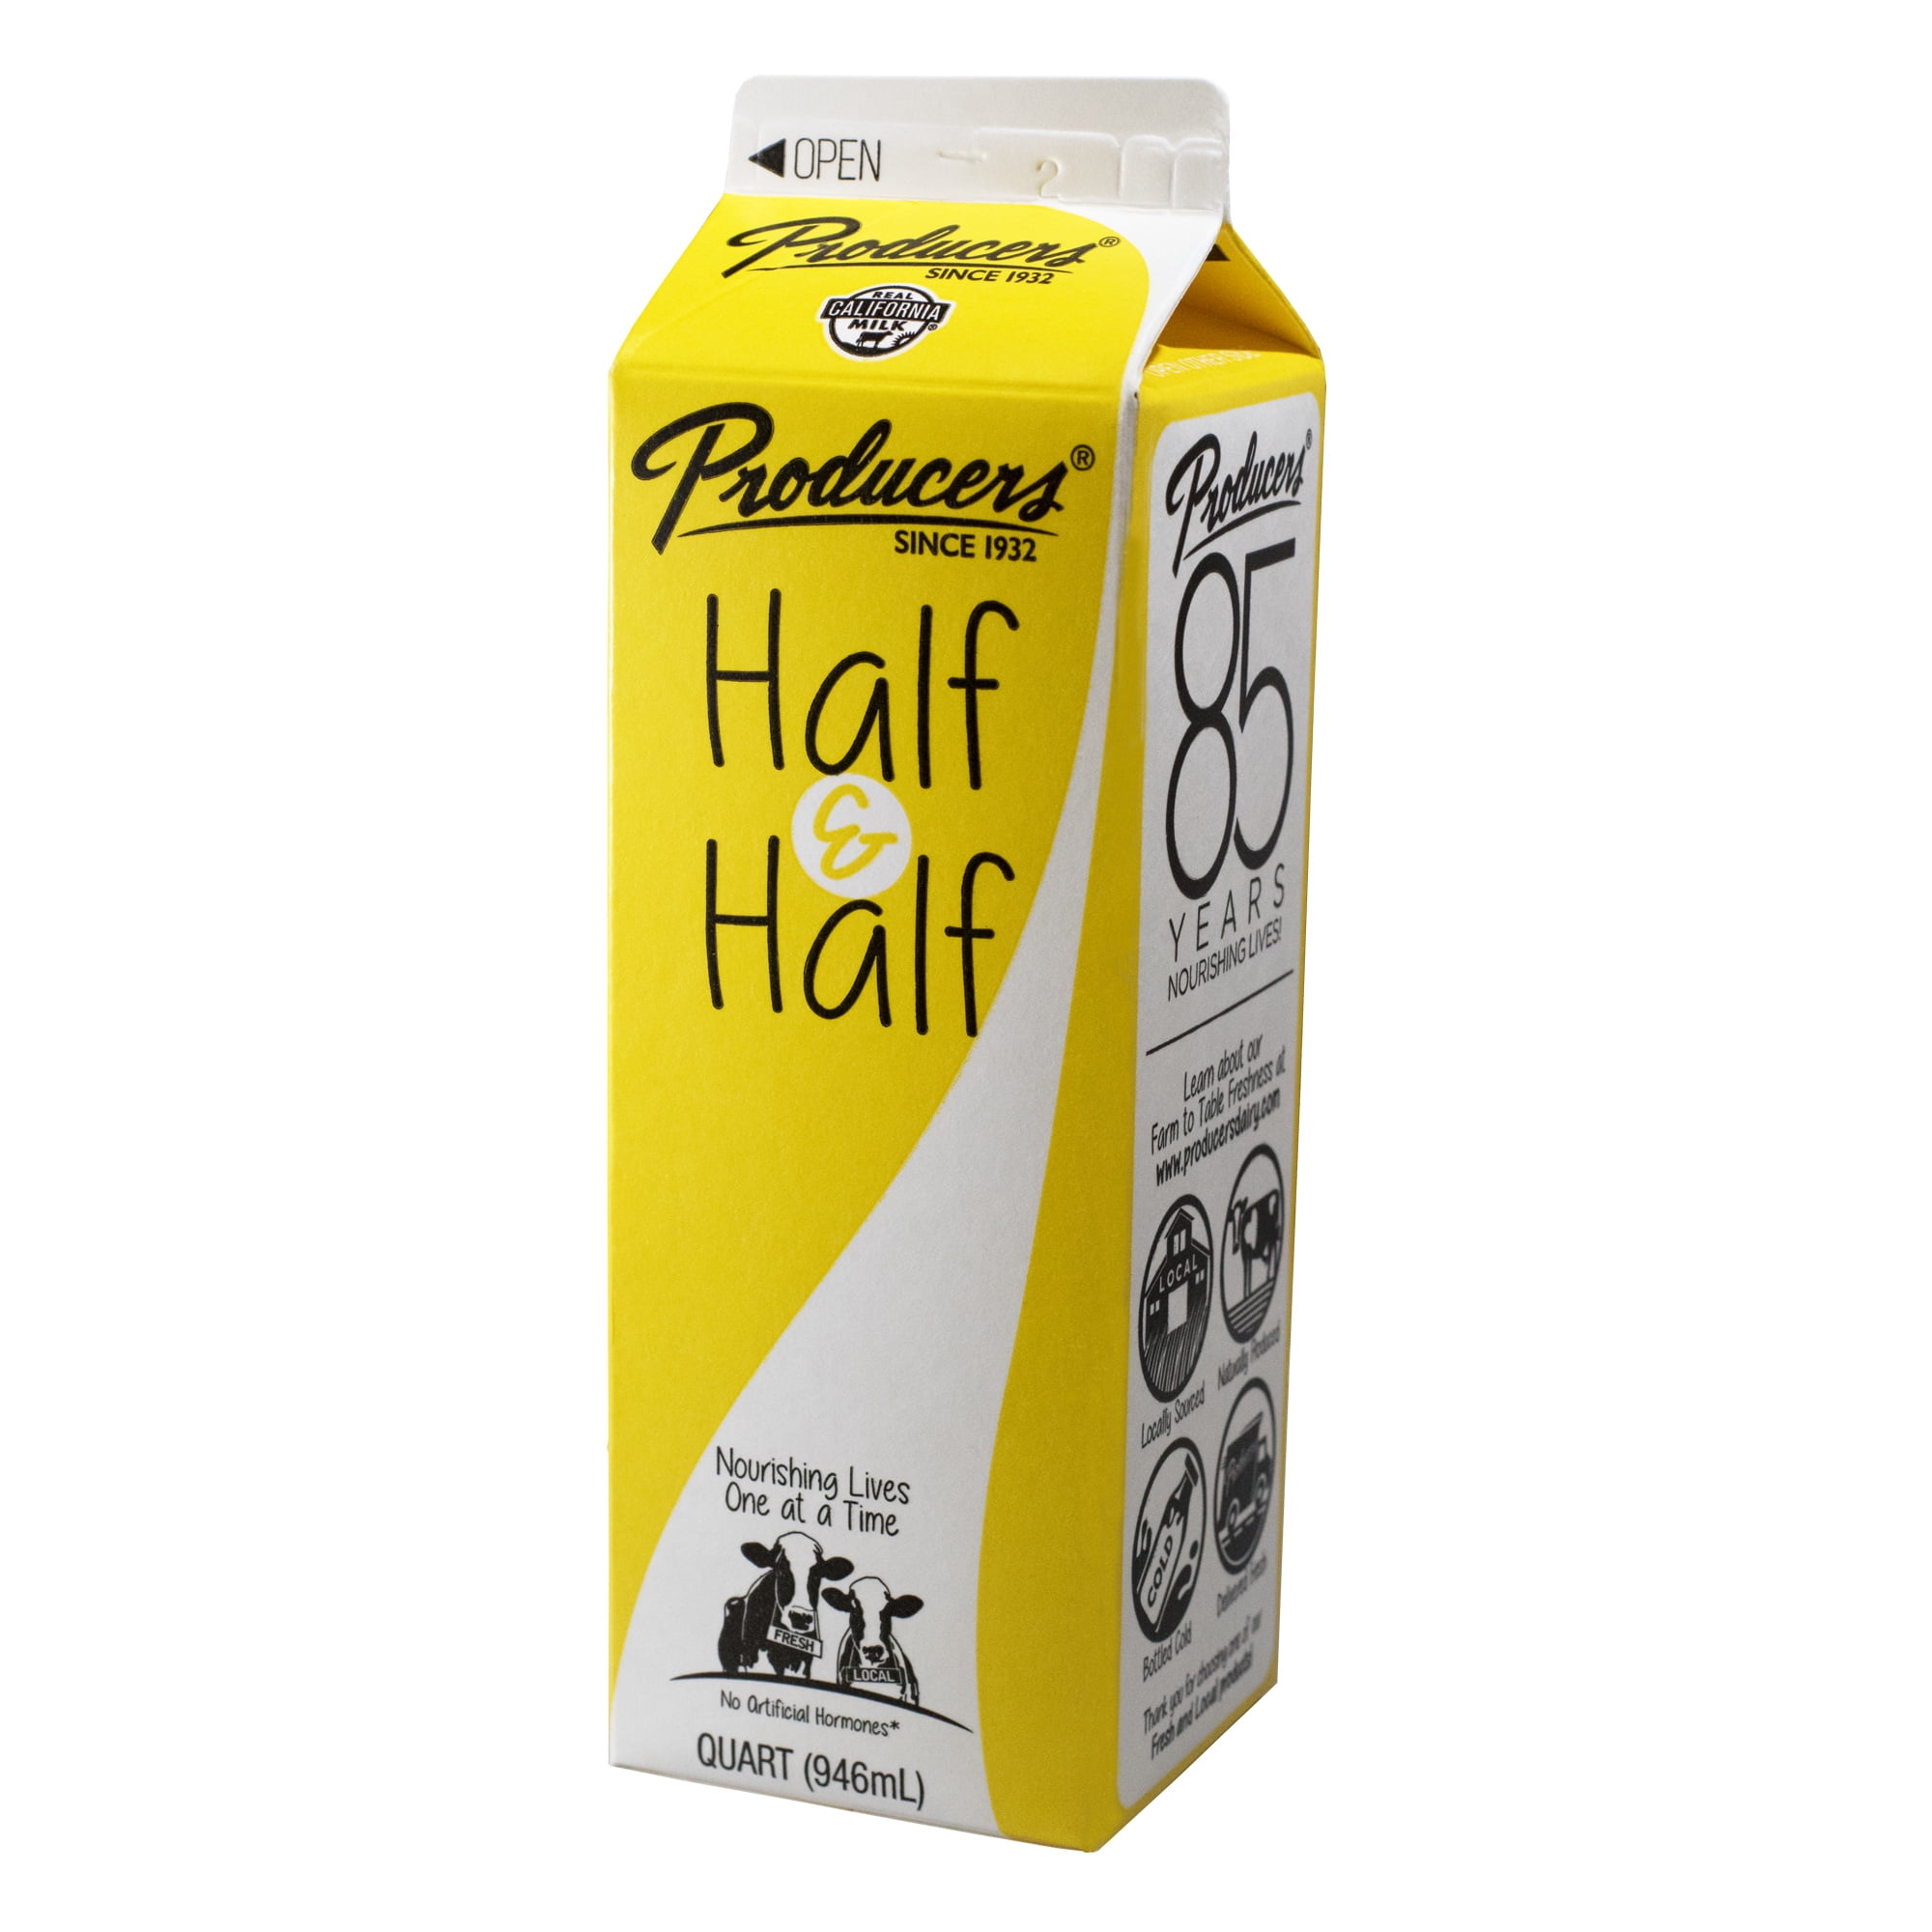 Producers Dairy Half Half 1 Quart Walmart Com Walmart Com